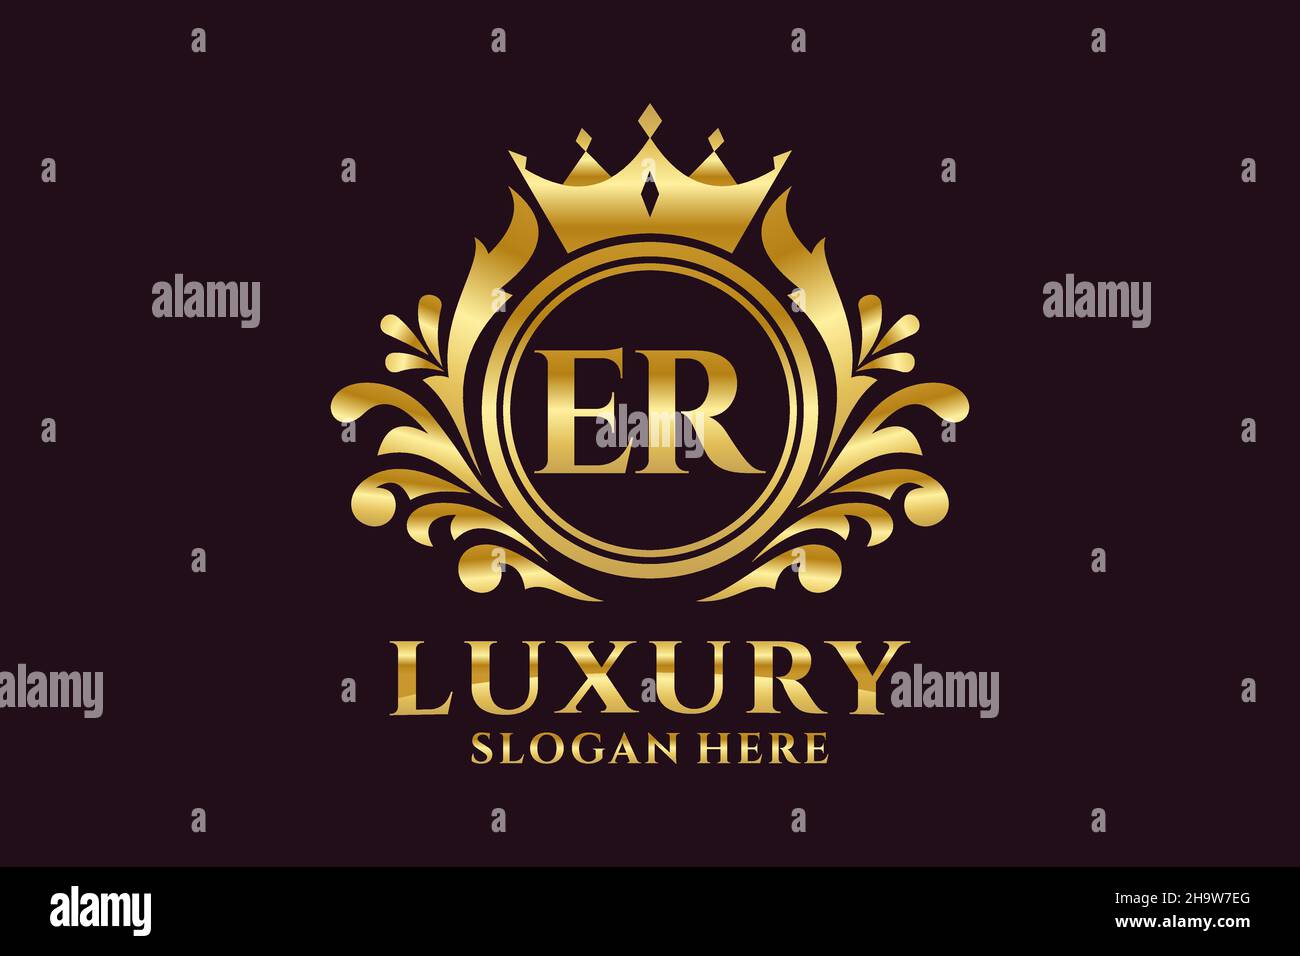 ER Letter Royal Luxury Logo Vorlage in Vektorgrafik für luxuriöse Branding-Projekte und andere Vektorgrafik. Stock Vektor